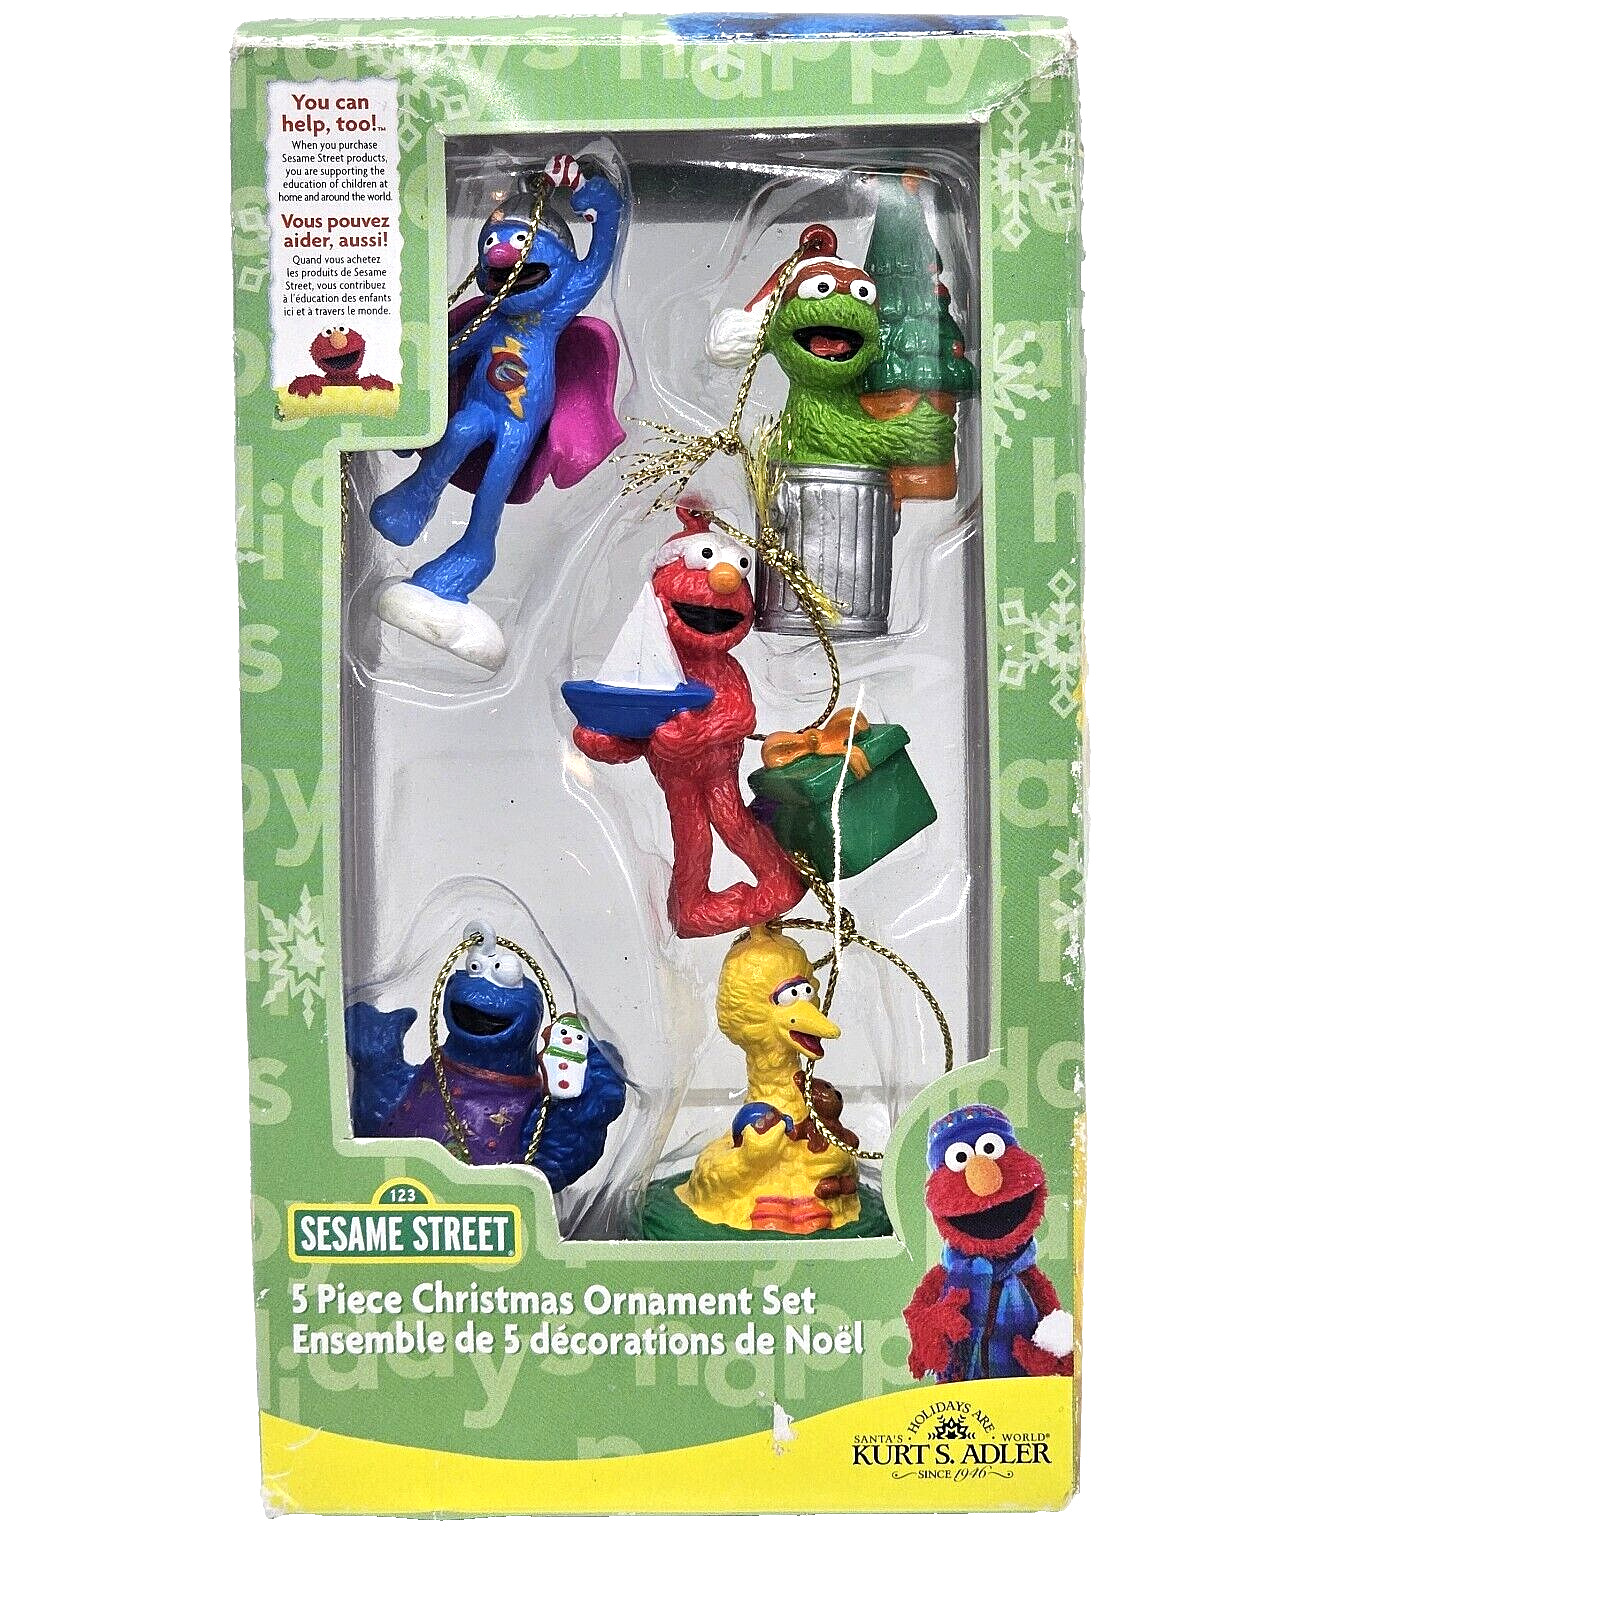 2007 Sesame Street KURT ADLER 5 Piece Mini Christmas Holiday Ornament Set